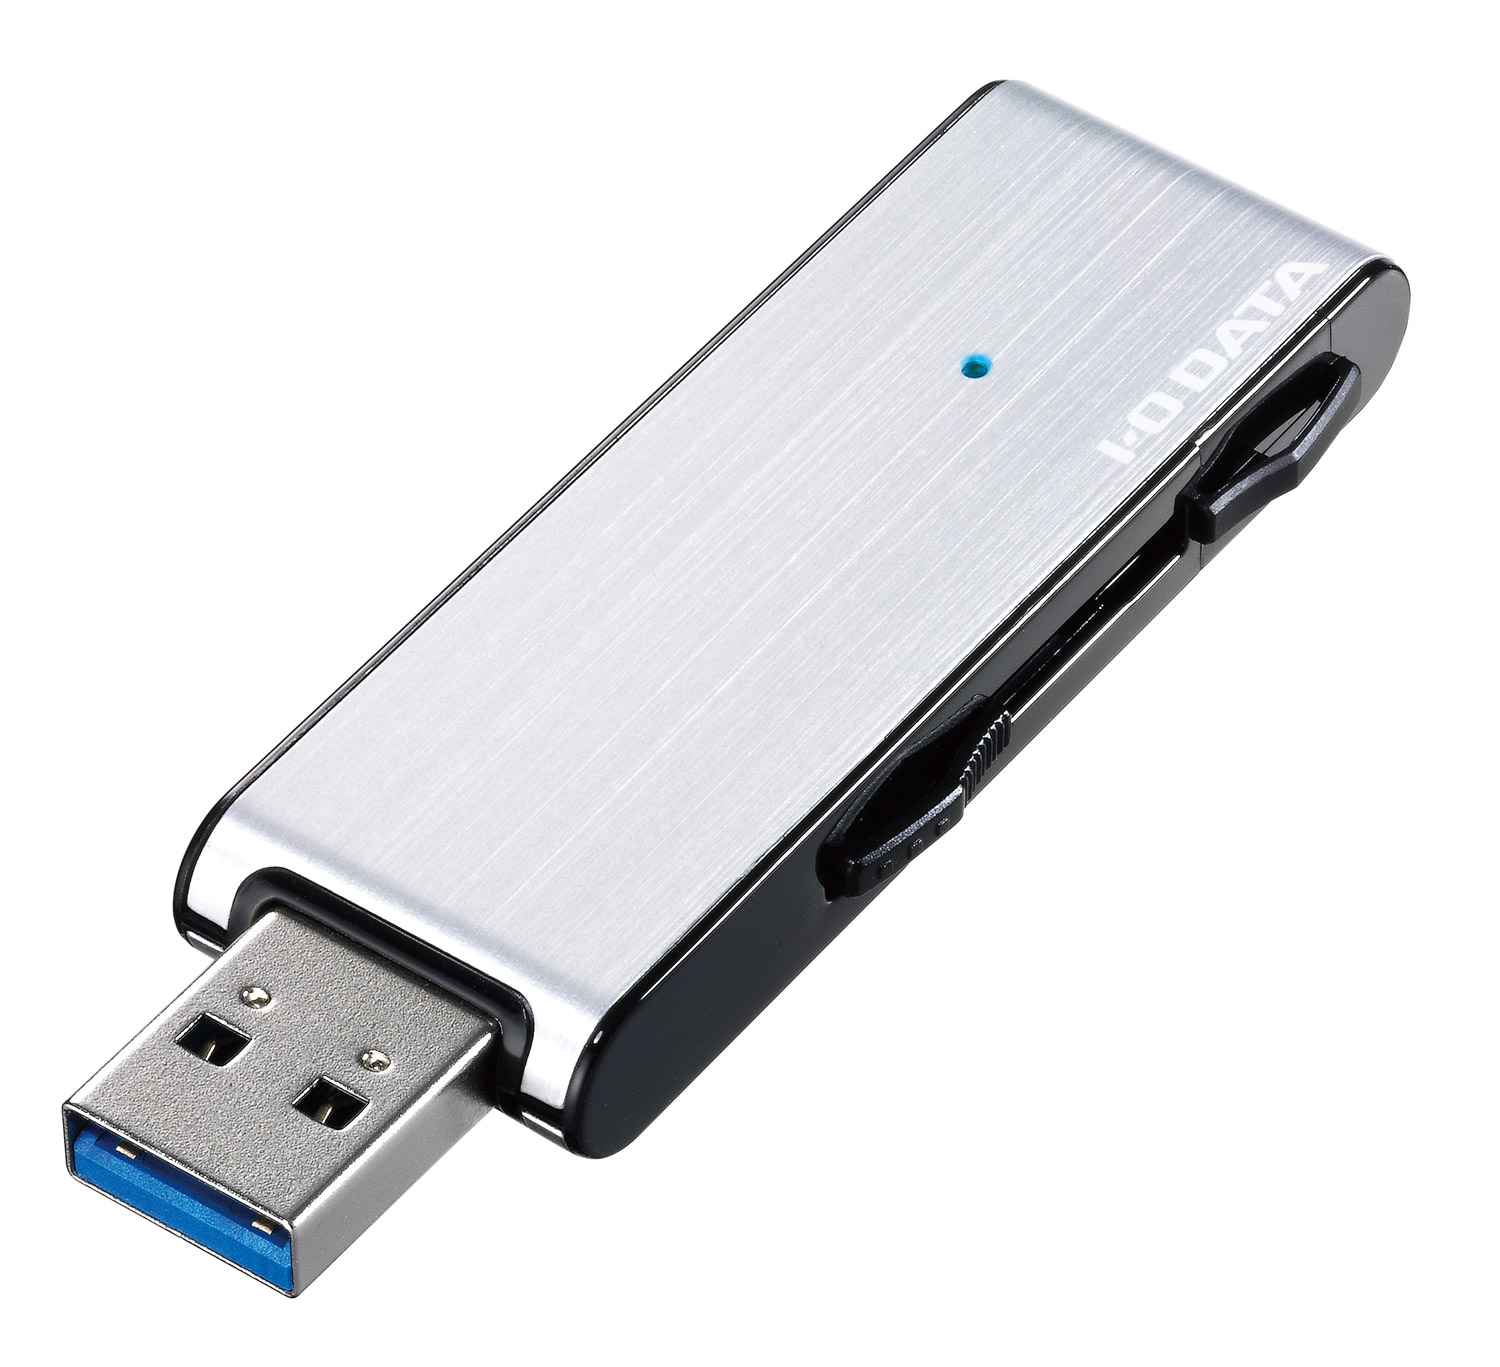 U3-MAXシリーズ 仕様 | USBメモリー | IODATA アイ・オー・データ機器